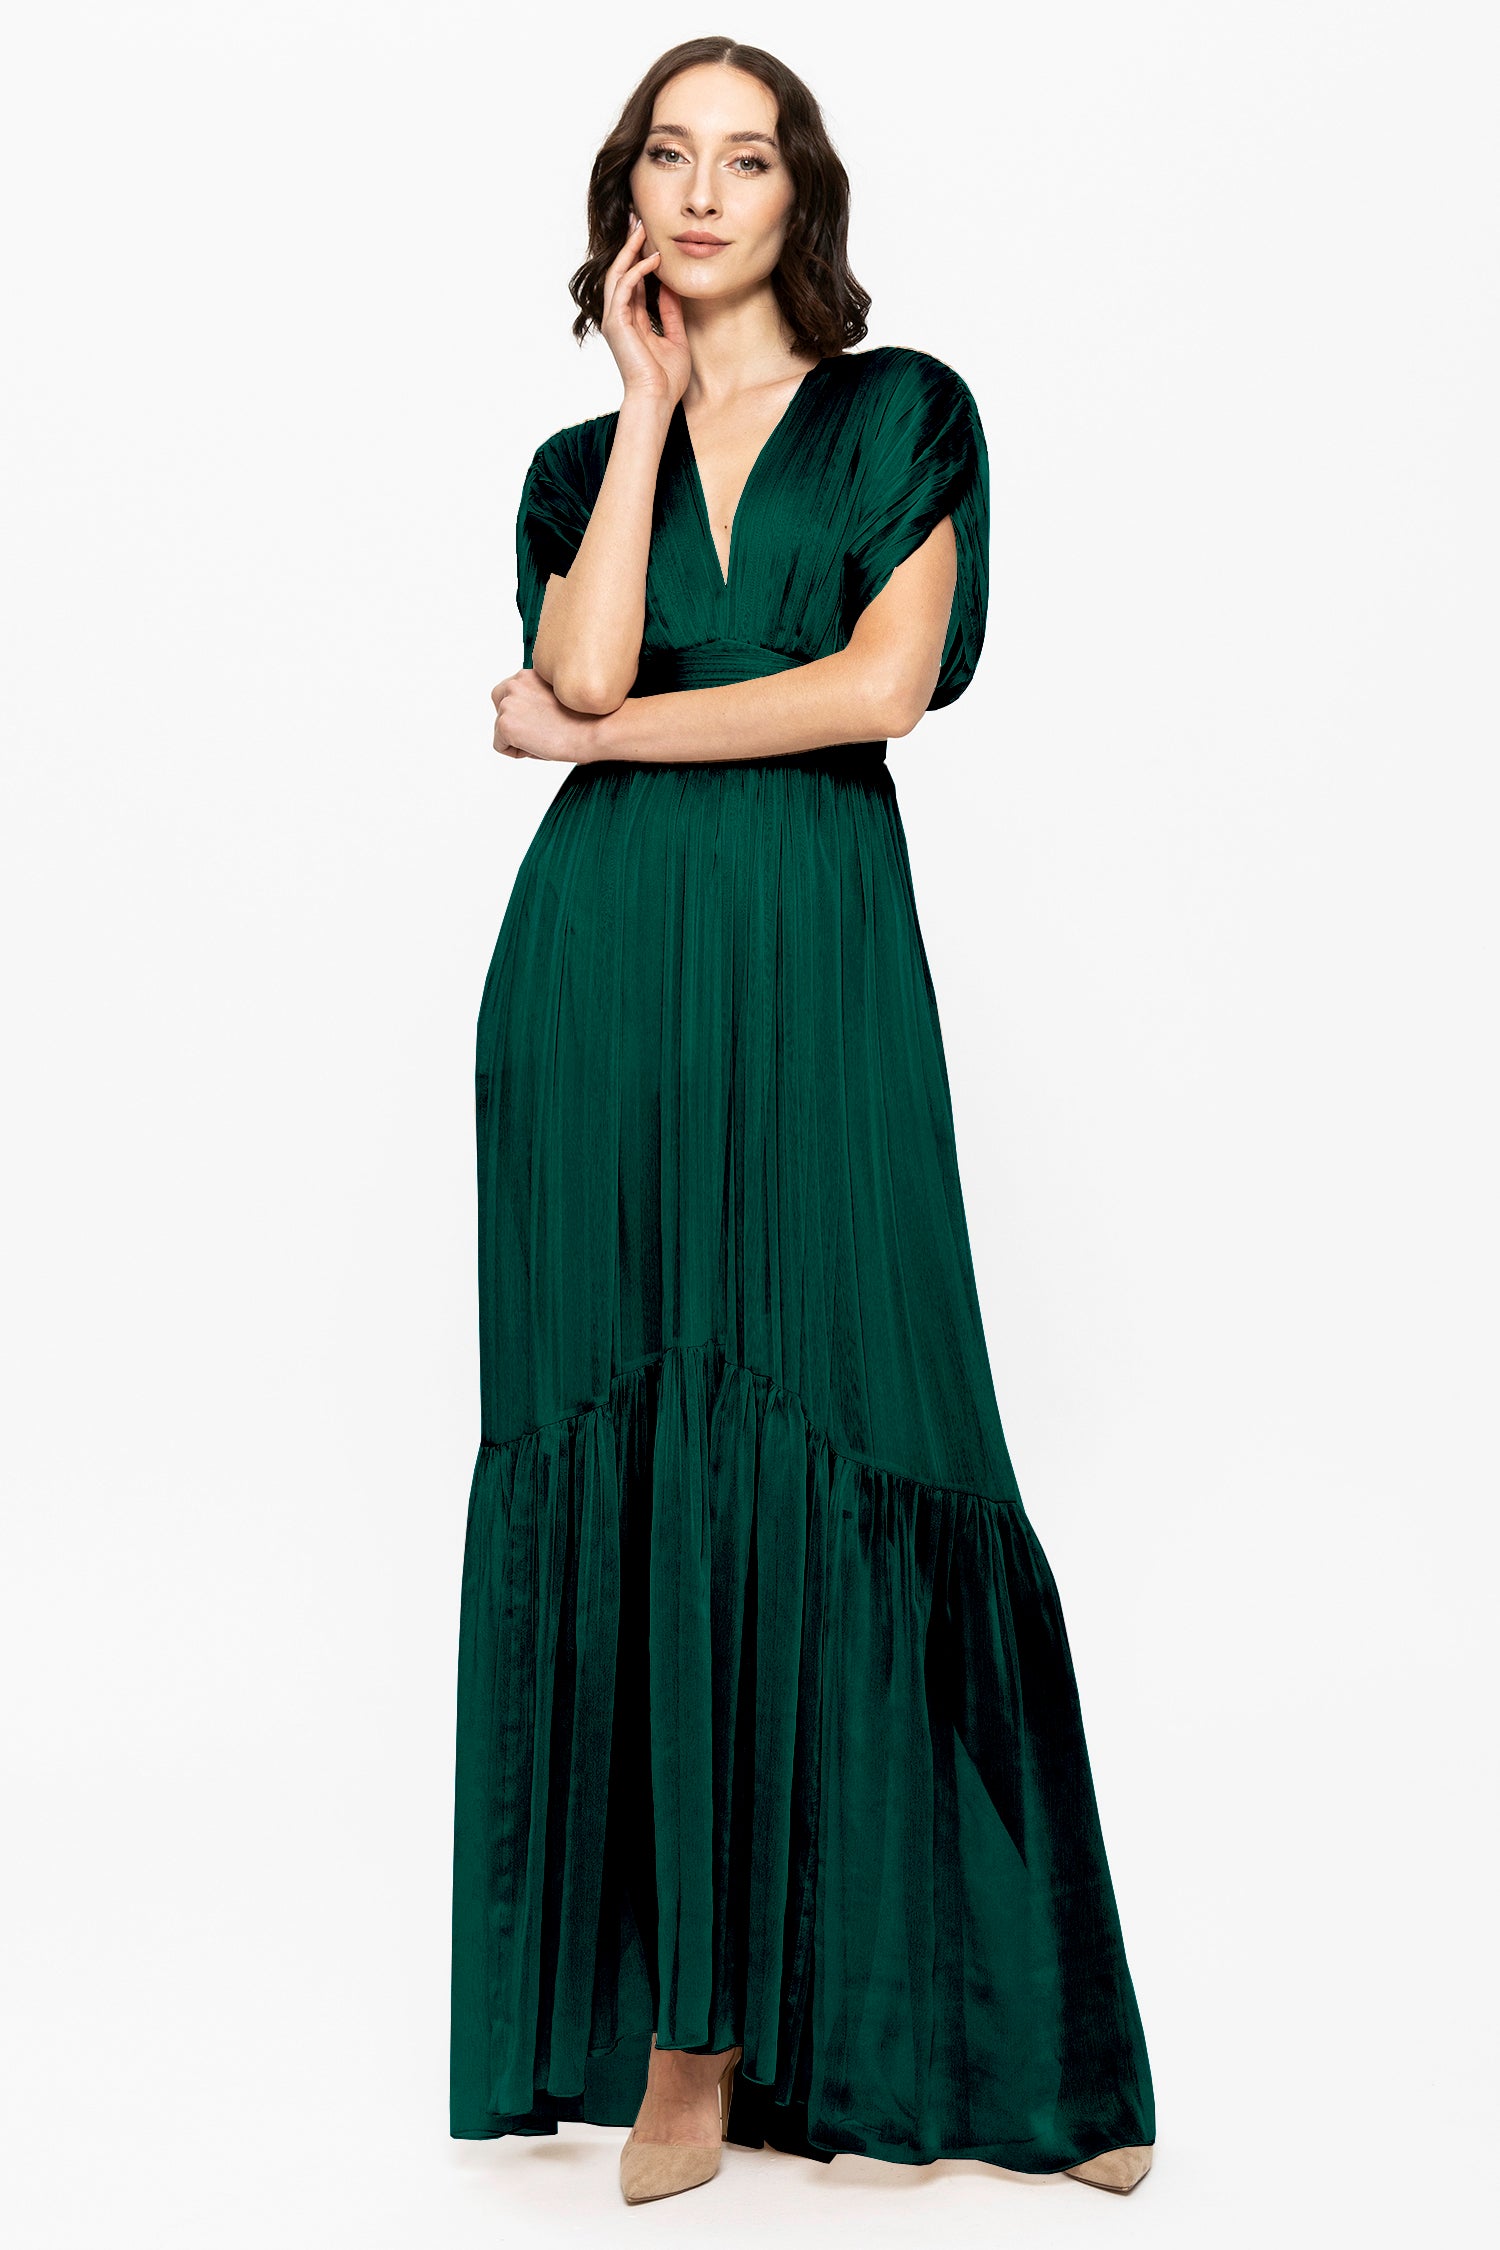 Lerena Chiffon Evening Gown Emerald